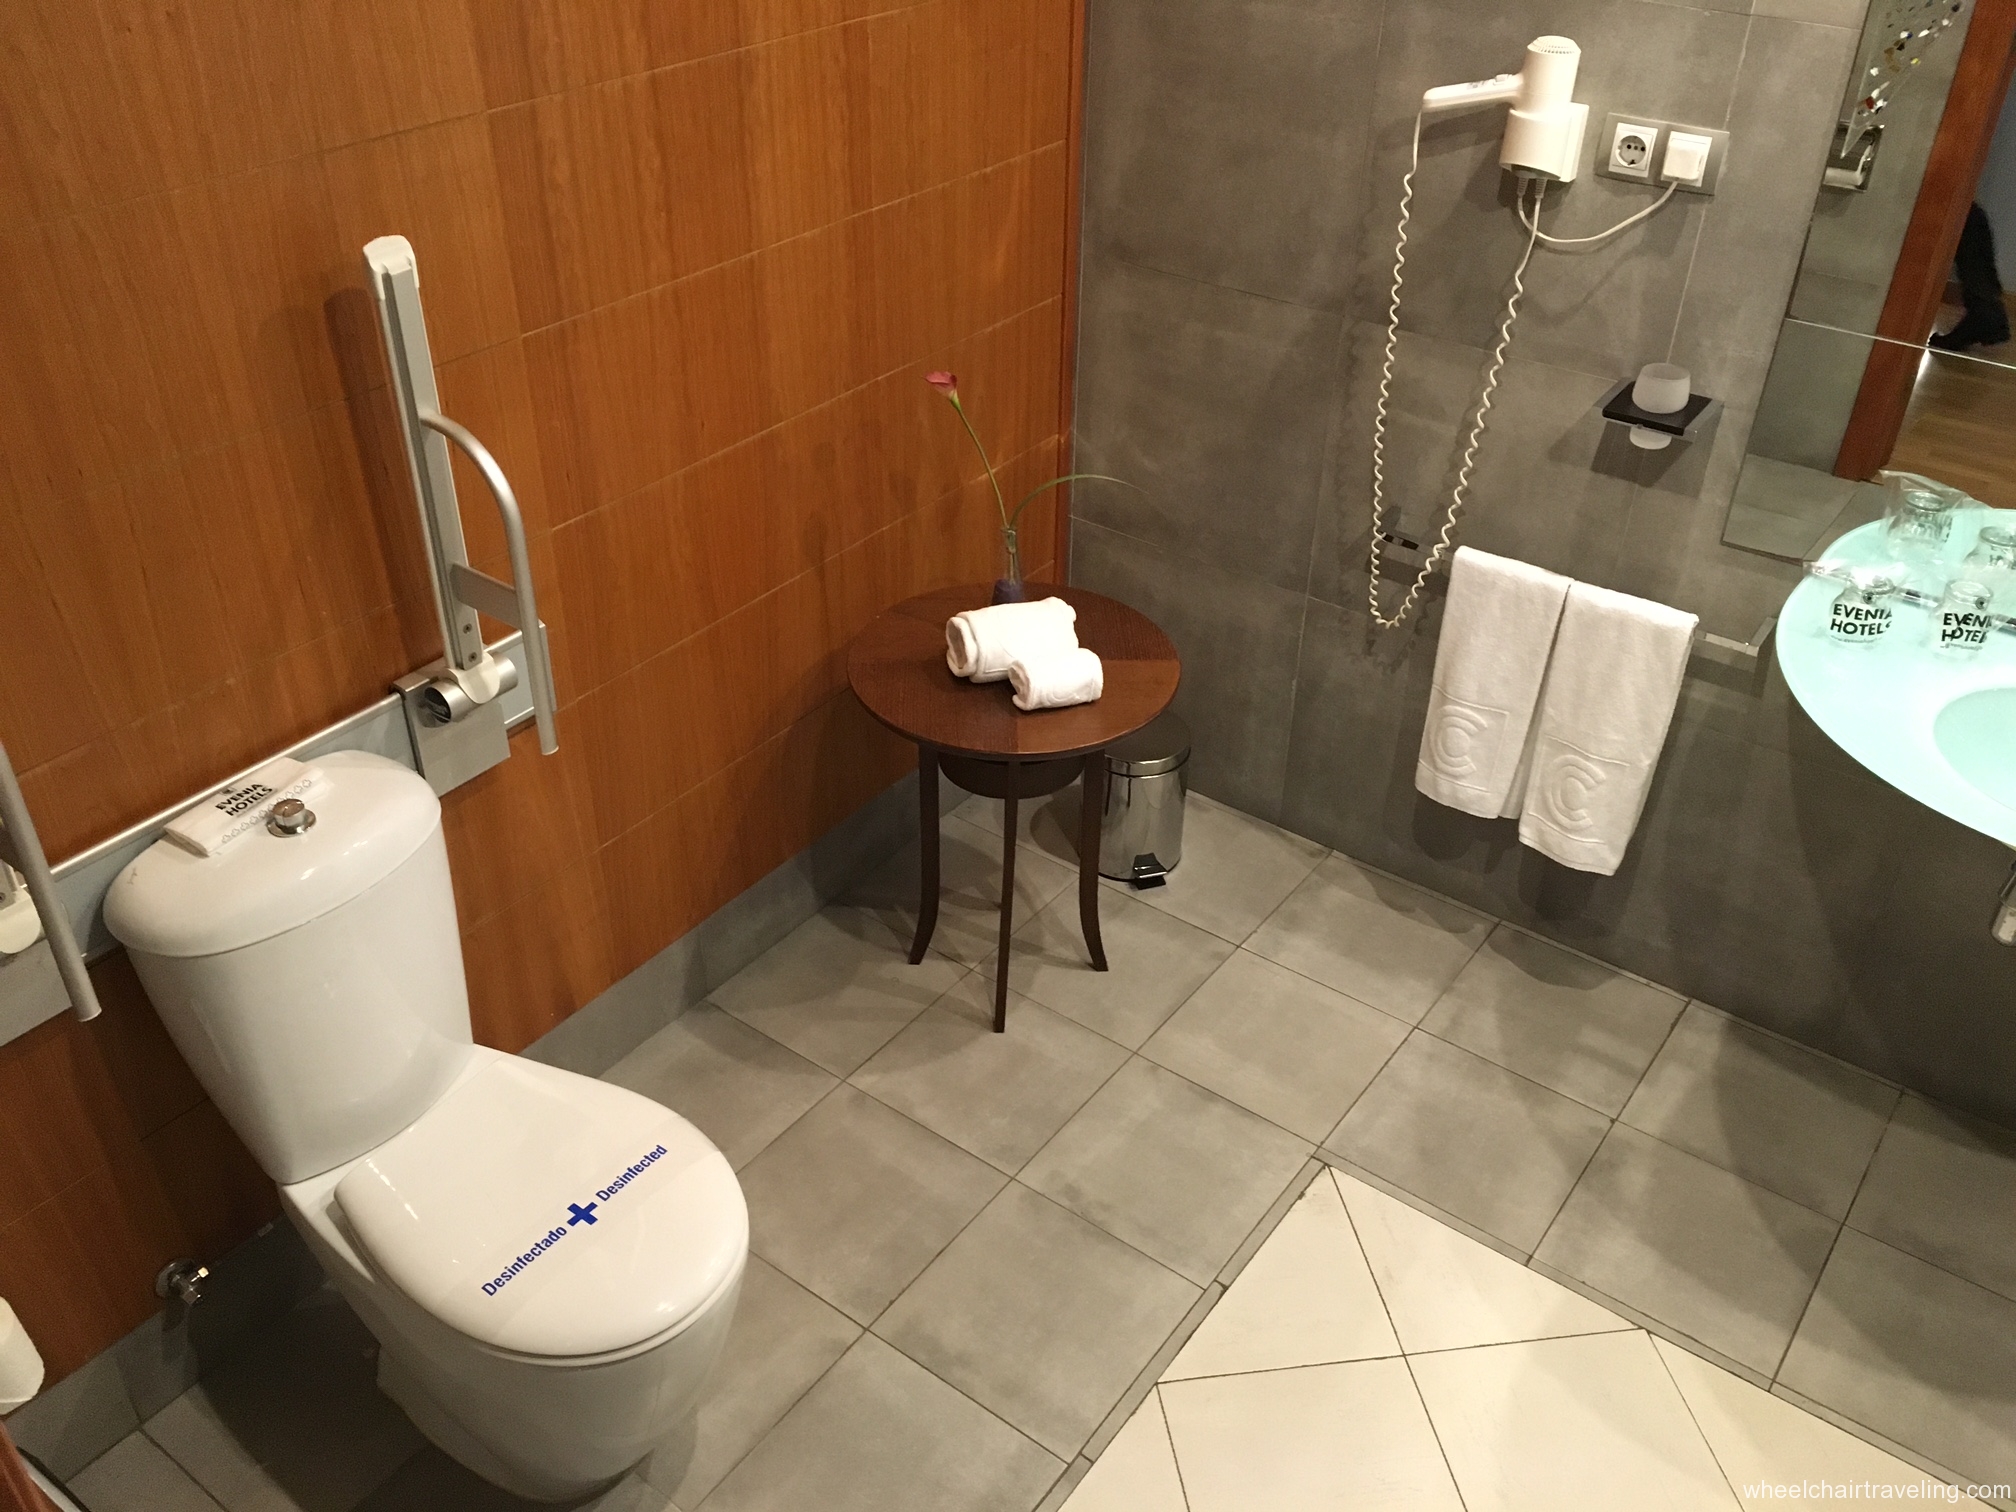 Barcelona hotel bathroom toilet